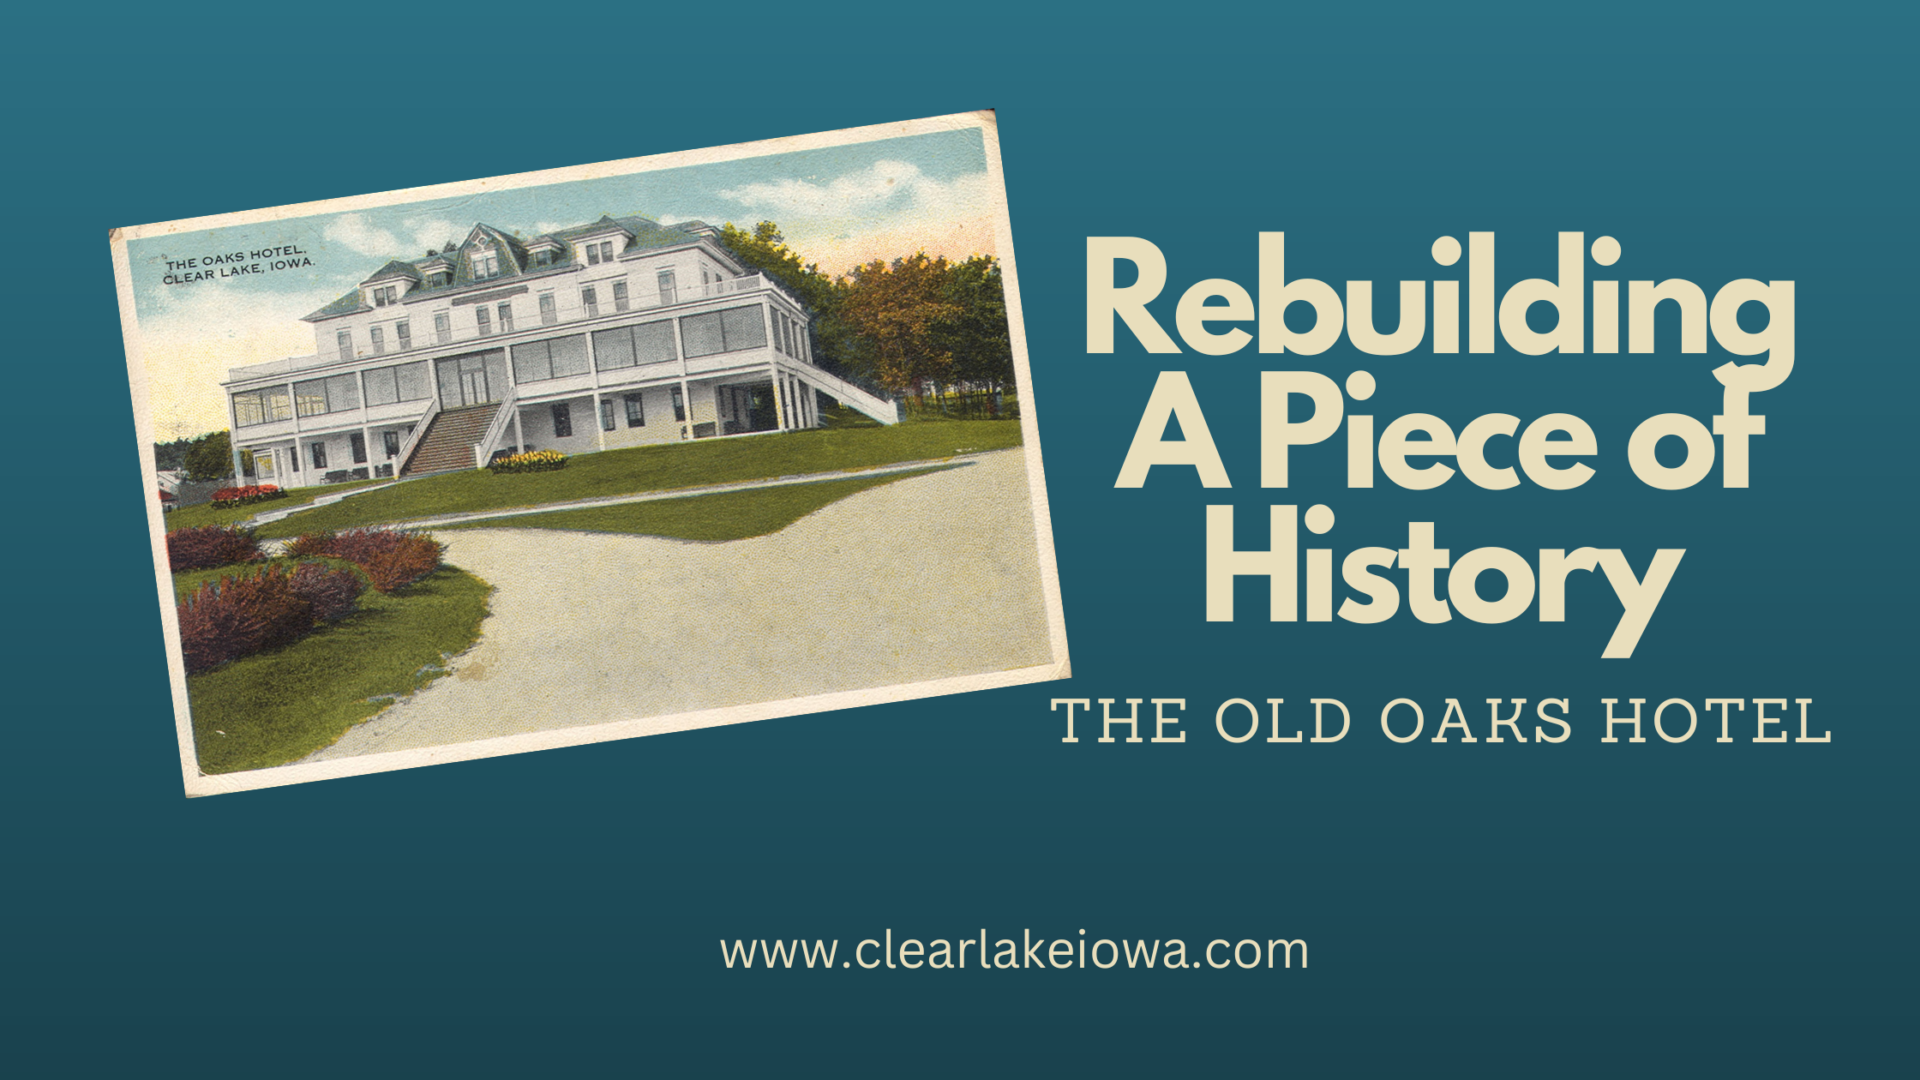 The Old Oaks Hotel in Clear Lake, Iowa.